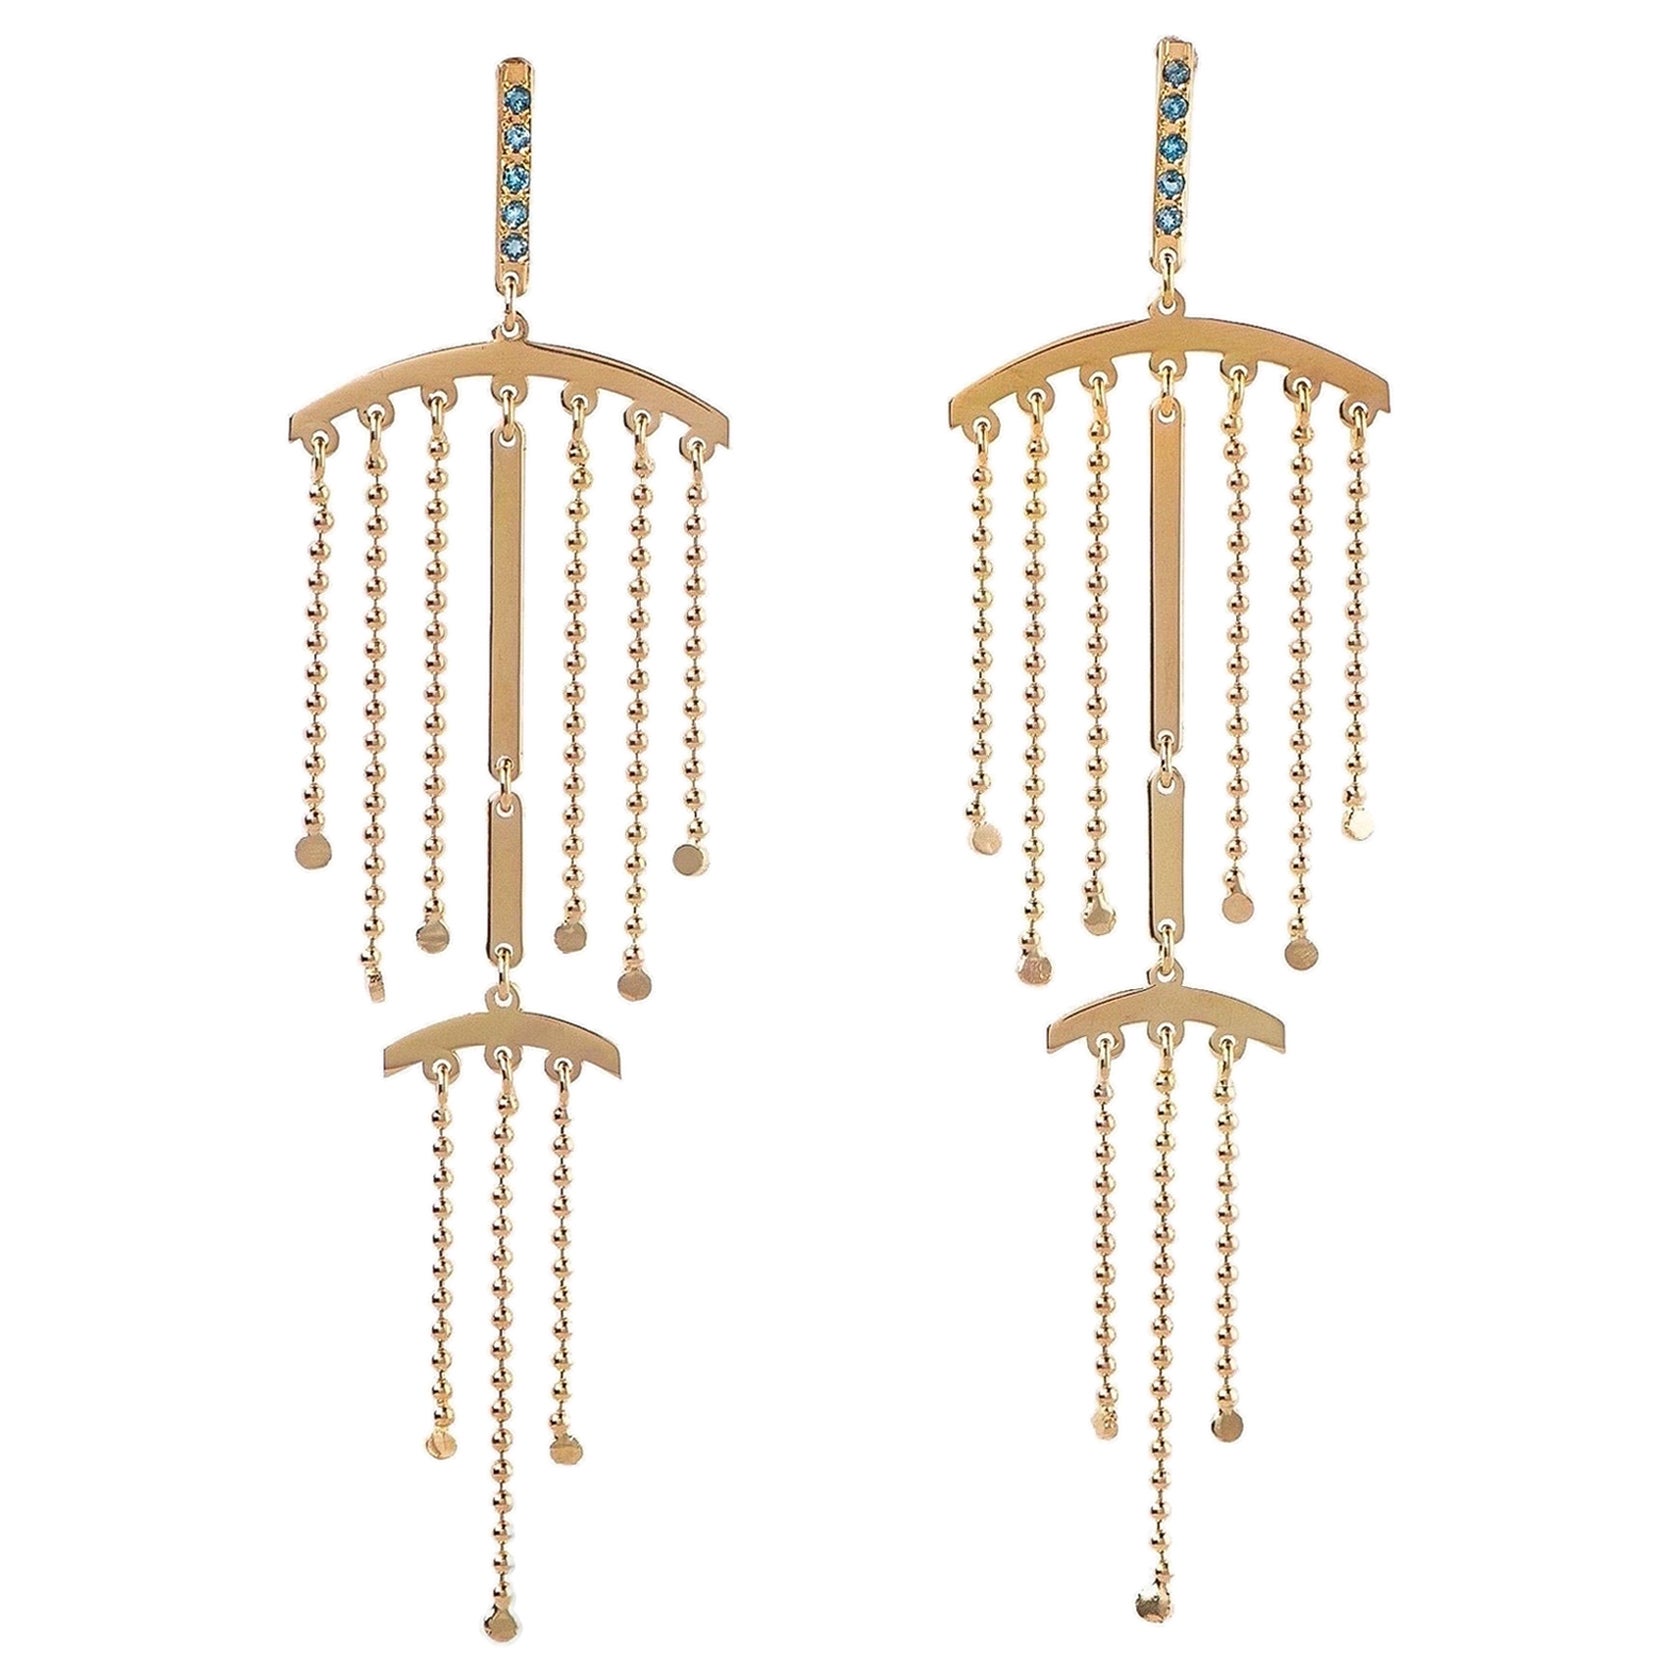 Maria Kotsoni, Contemporary 18K Gold, Blue Topaz Long Chandelier Dangle Earrings